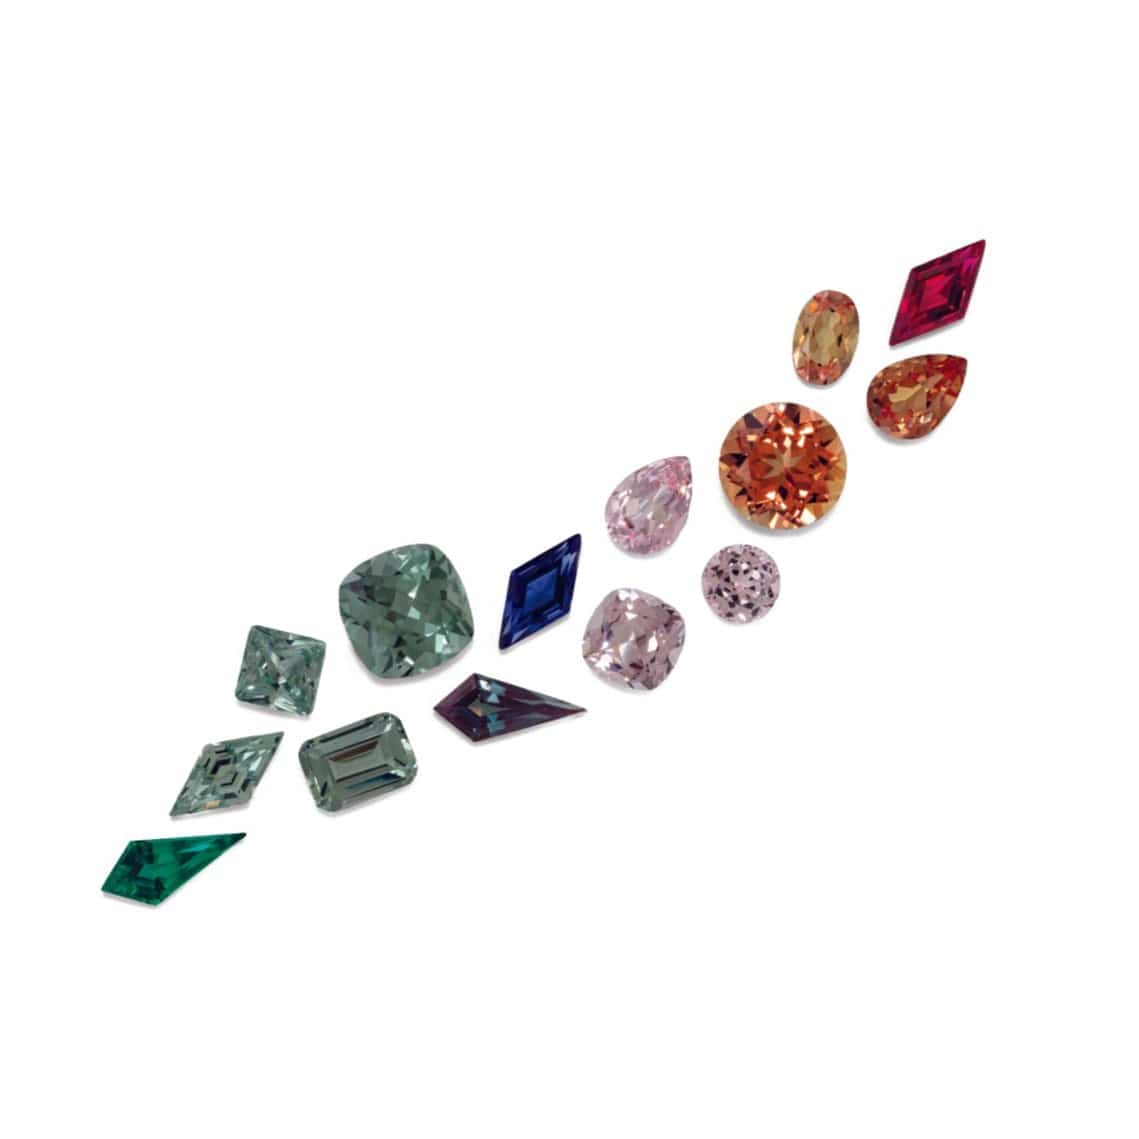 Sapphire Creation Box - 4 Edible Crystals